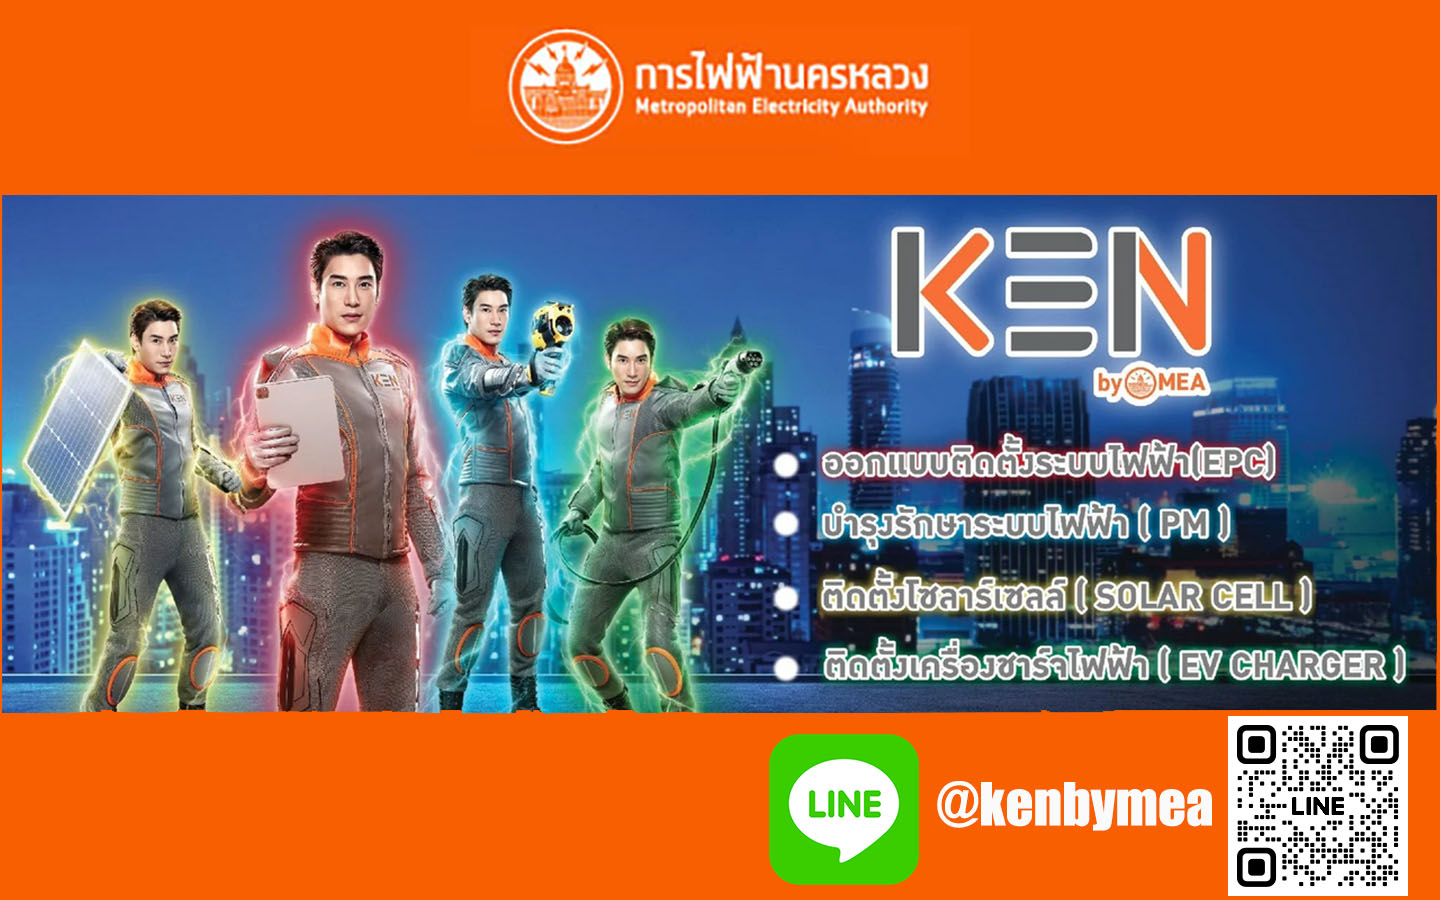 line@-kenbymea